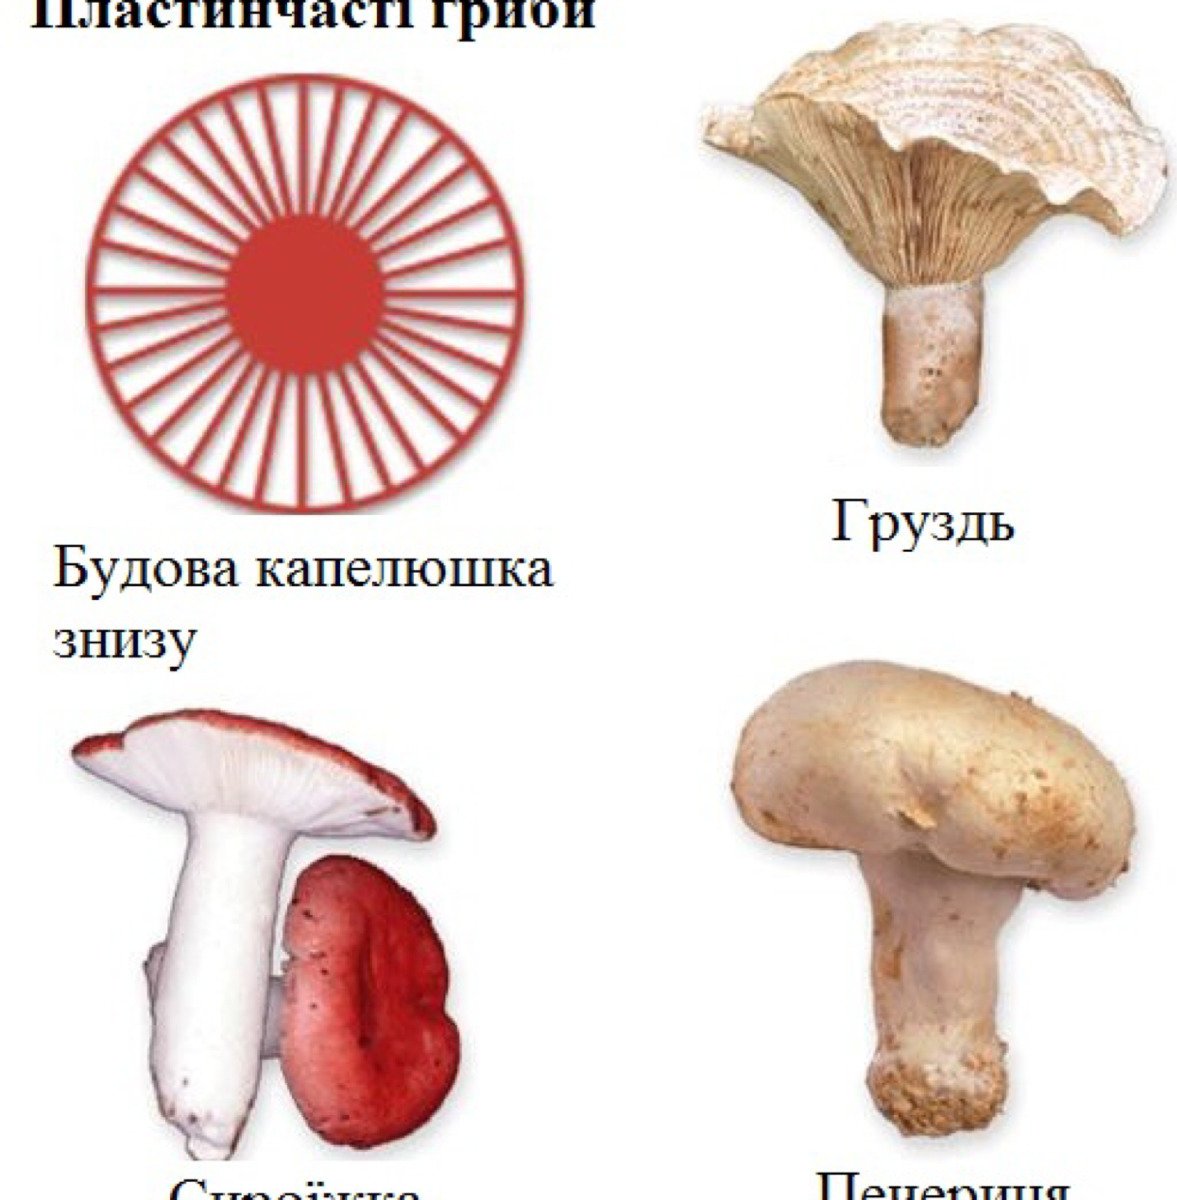 Шампиньон пластинчатый гименофор. Пластинчатые грибы ядовитые. Трубчатые и пластинчатые грибы. Пластинчатые грибы примеры ядовитые.